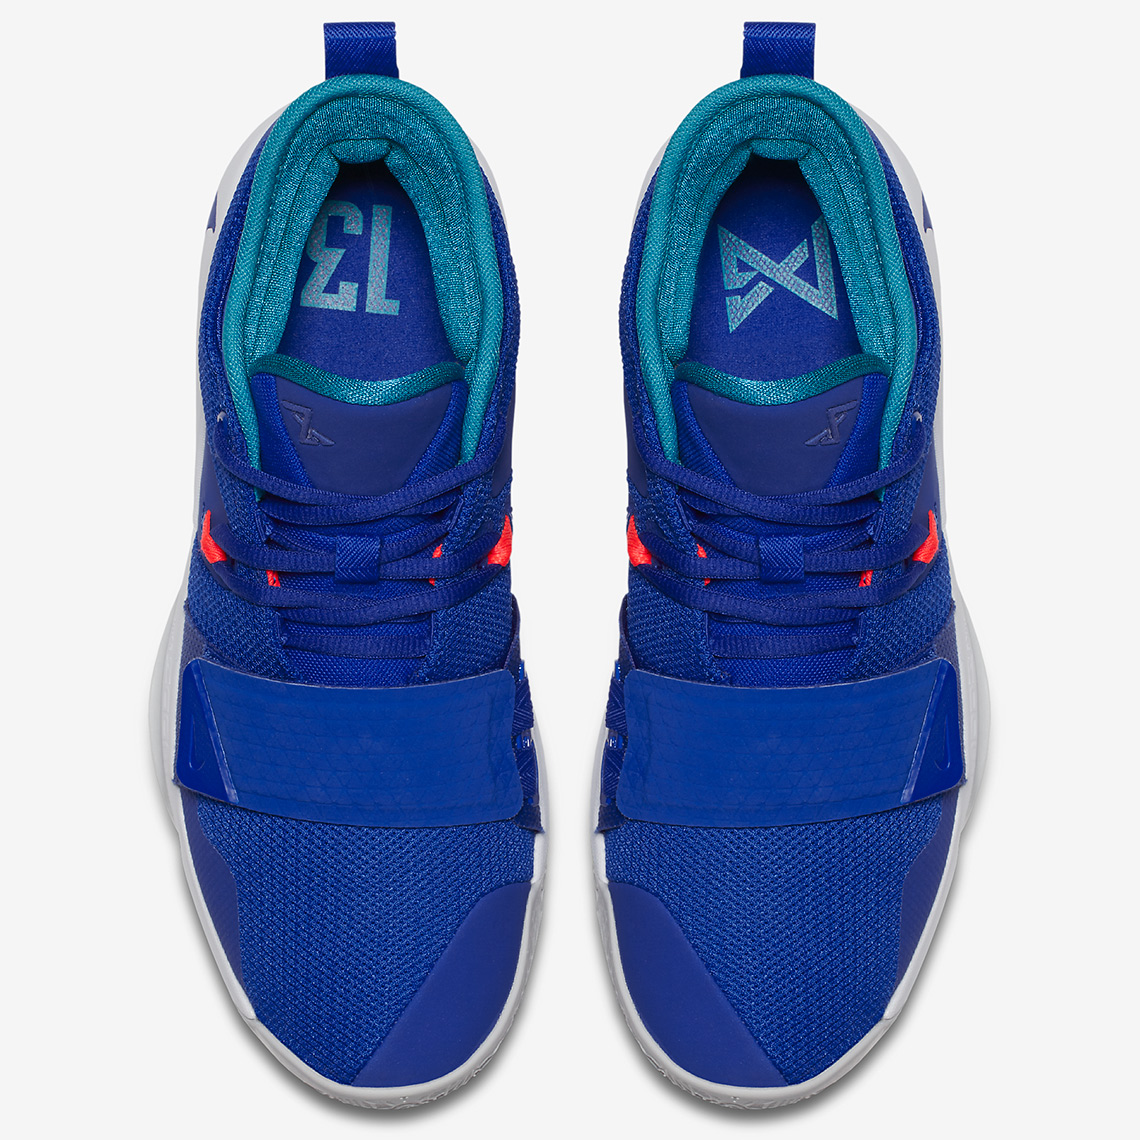 Nike PG 2.5 Racer Blue BQ8452-401 Release Date | SneakerNews.com